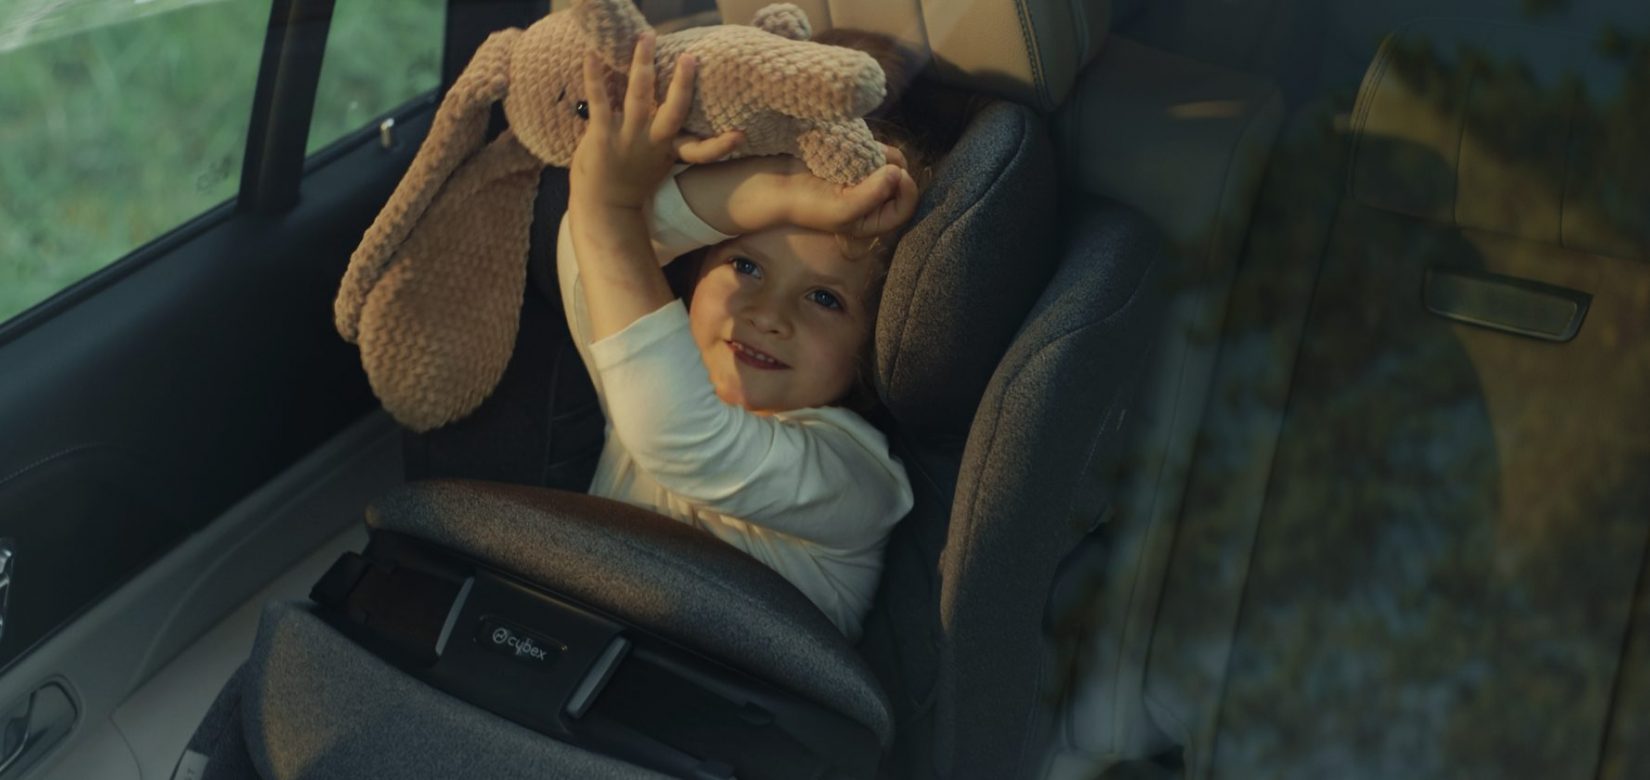 Anoris T i-Size με αερόσακο: Βραβεύτηκε ως το ασφαλέστερο παιδικό κάθισμα αυτοκινήτου!